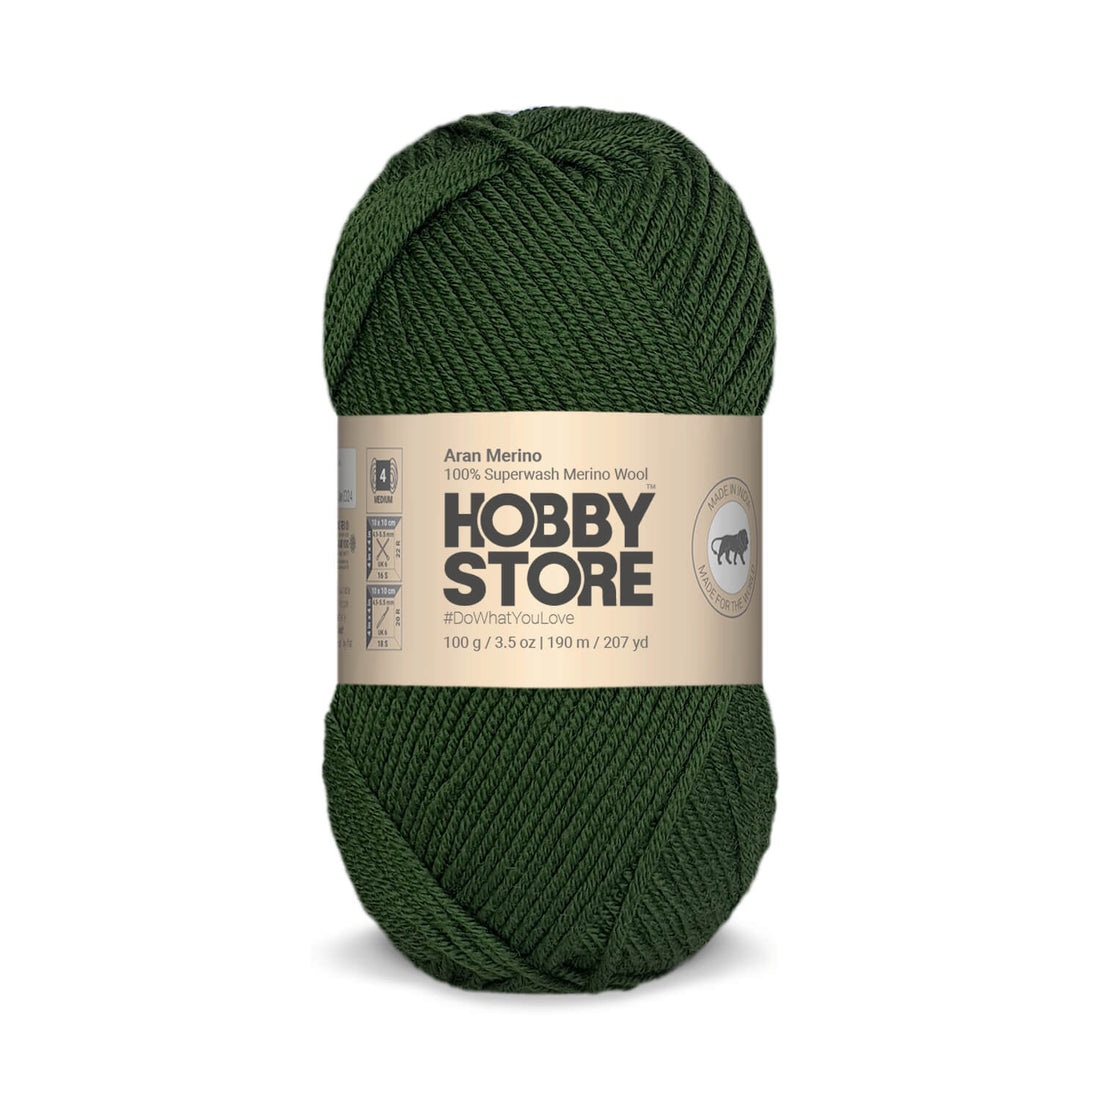 Aran Merino Wool by Hobby Store - Green AM017